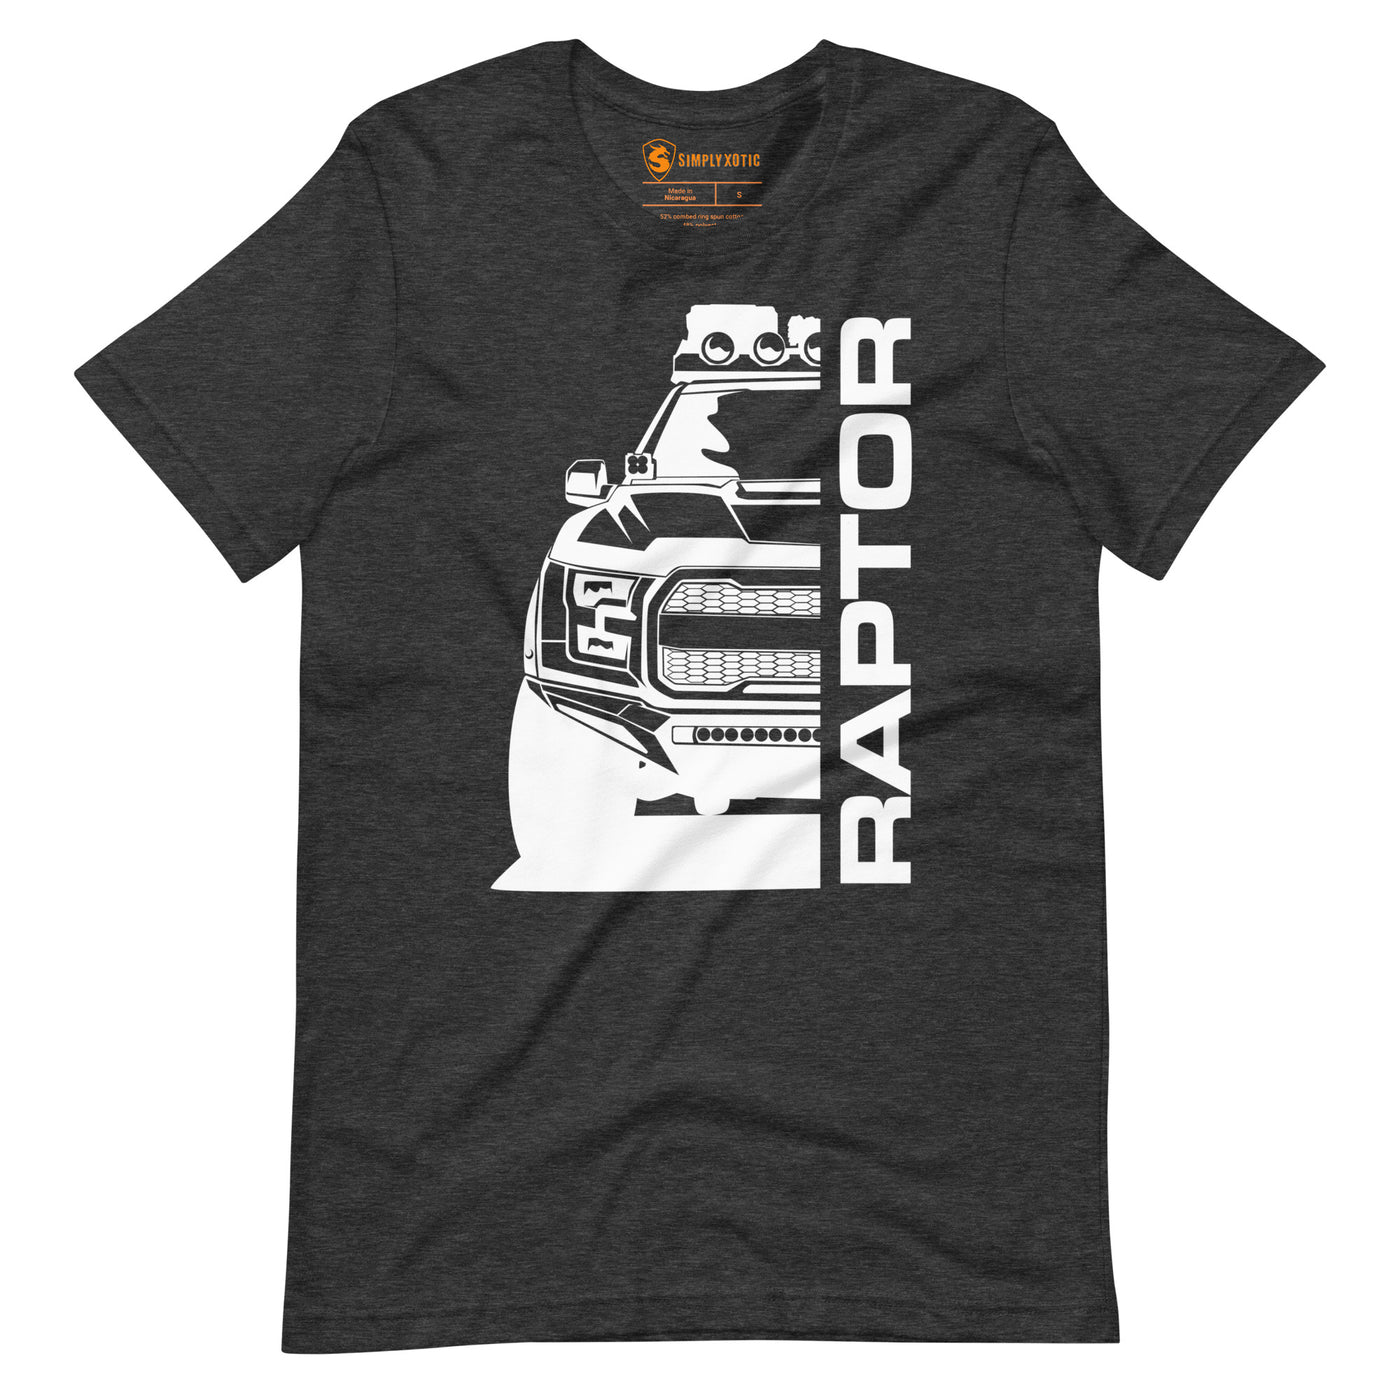 Raptor T-shirt